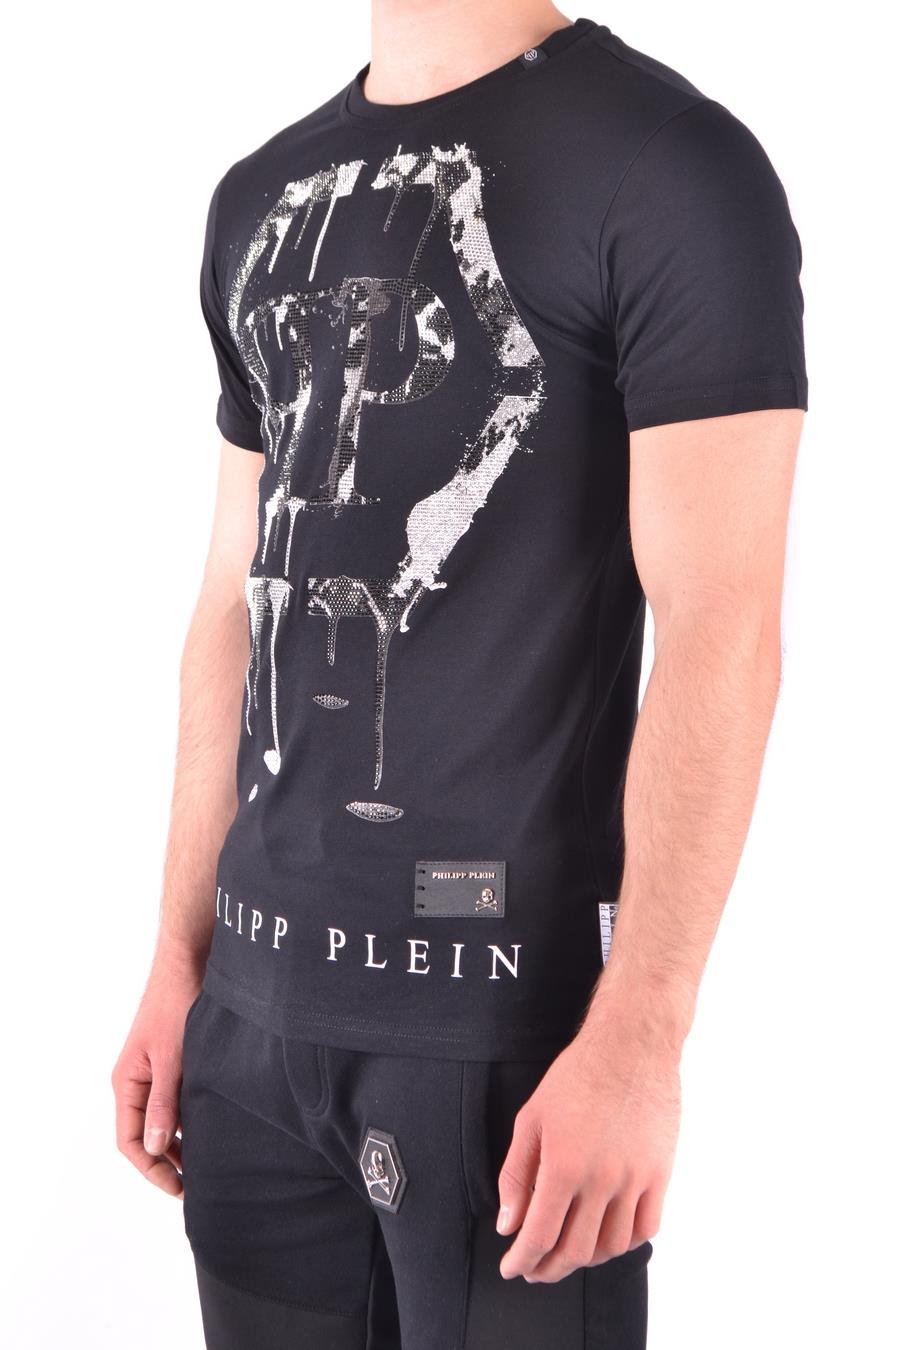 philipp plein t shirt new collection